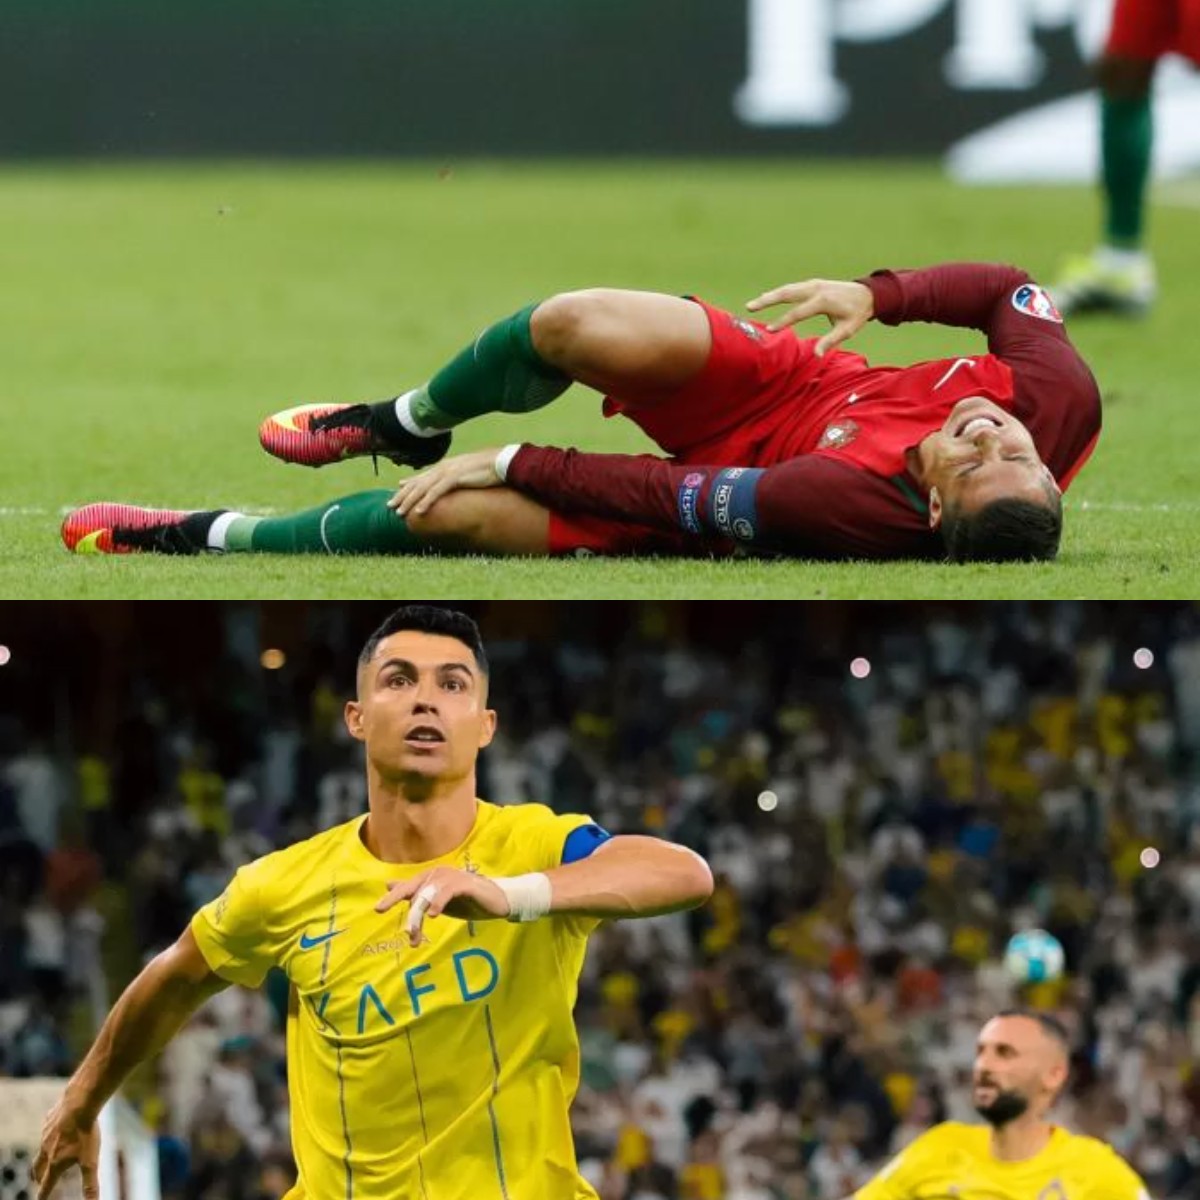 Kondisi Kaki Mega Bintang Portugal Bikin Khawatir Fans Sepakbola!